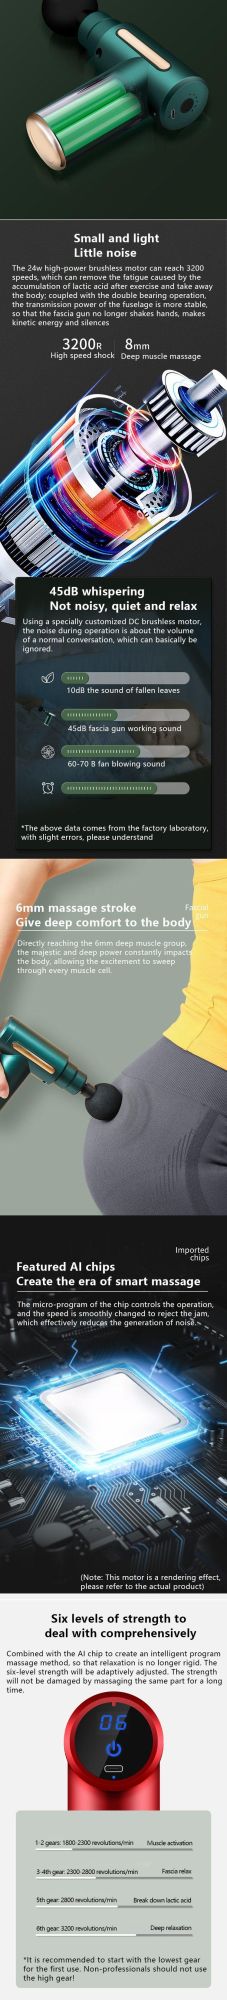 Mini Relax Best Gifts for Christmas Massage Muscle Massage Gun